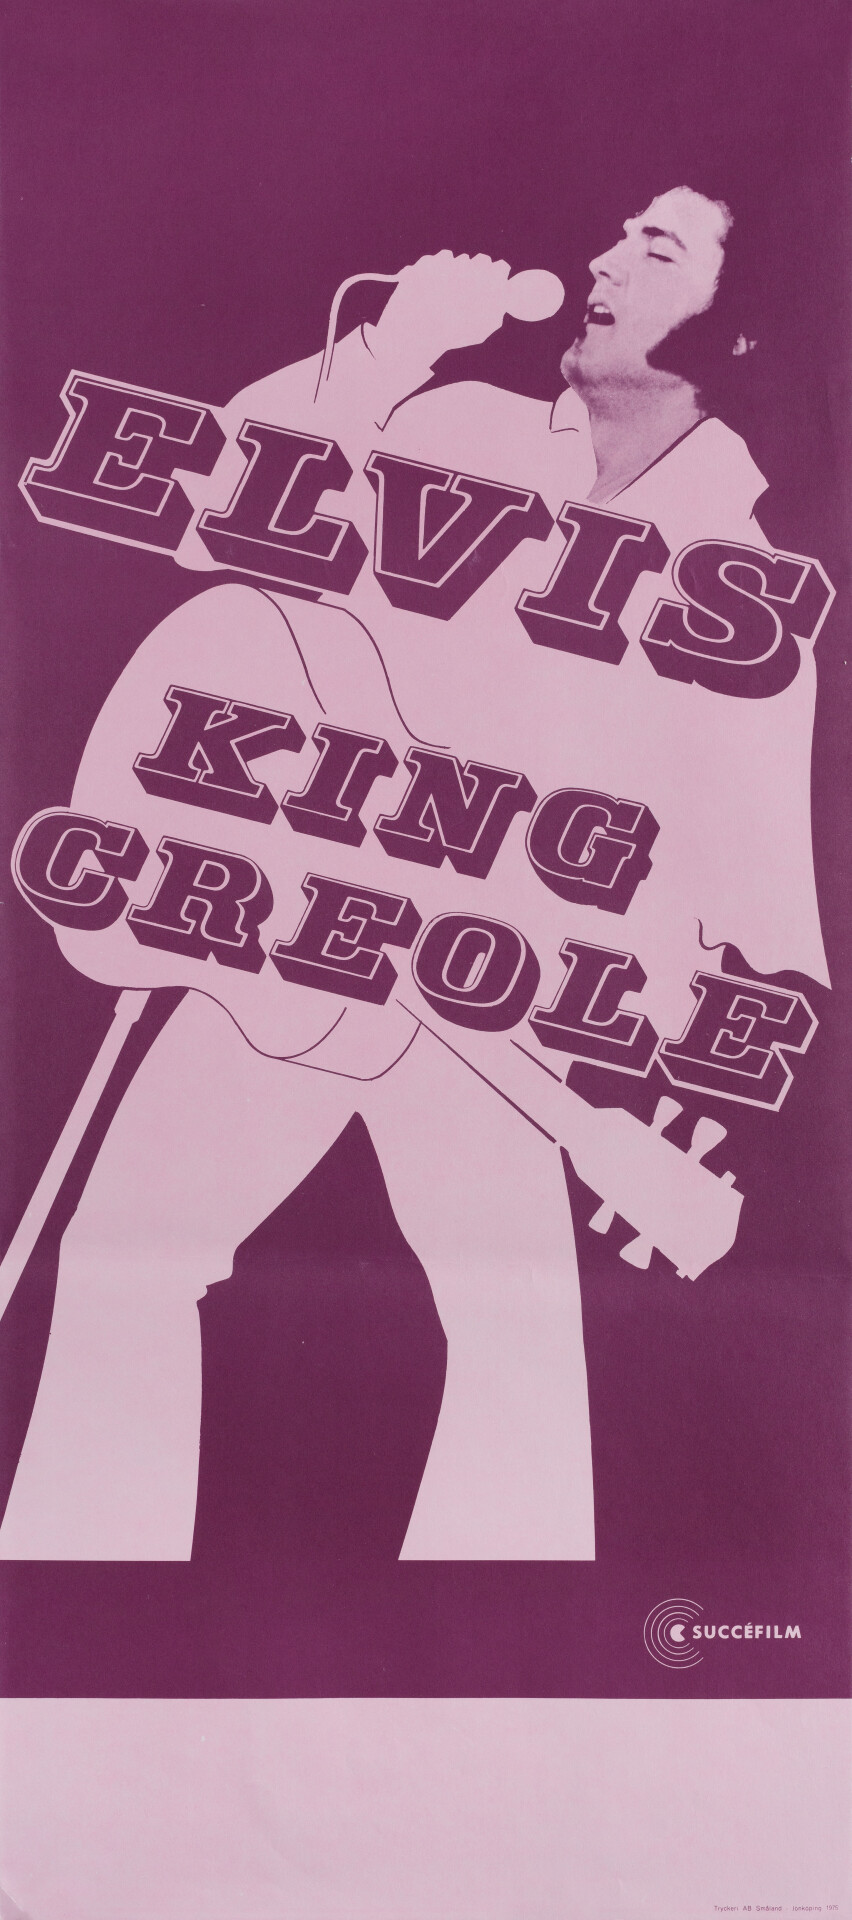 Кинг Креол (King Creole, 1958), режиссёр Майкл Кертиц, шведский постер к фильму (графический дизайн, 1975 год)